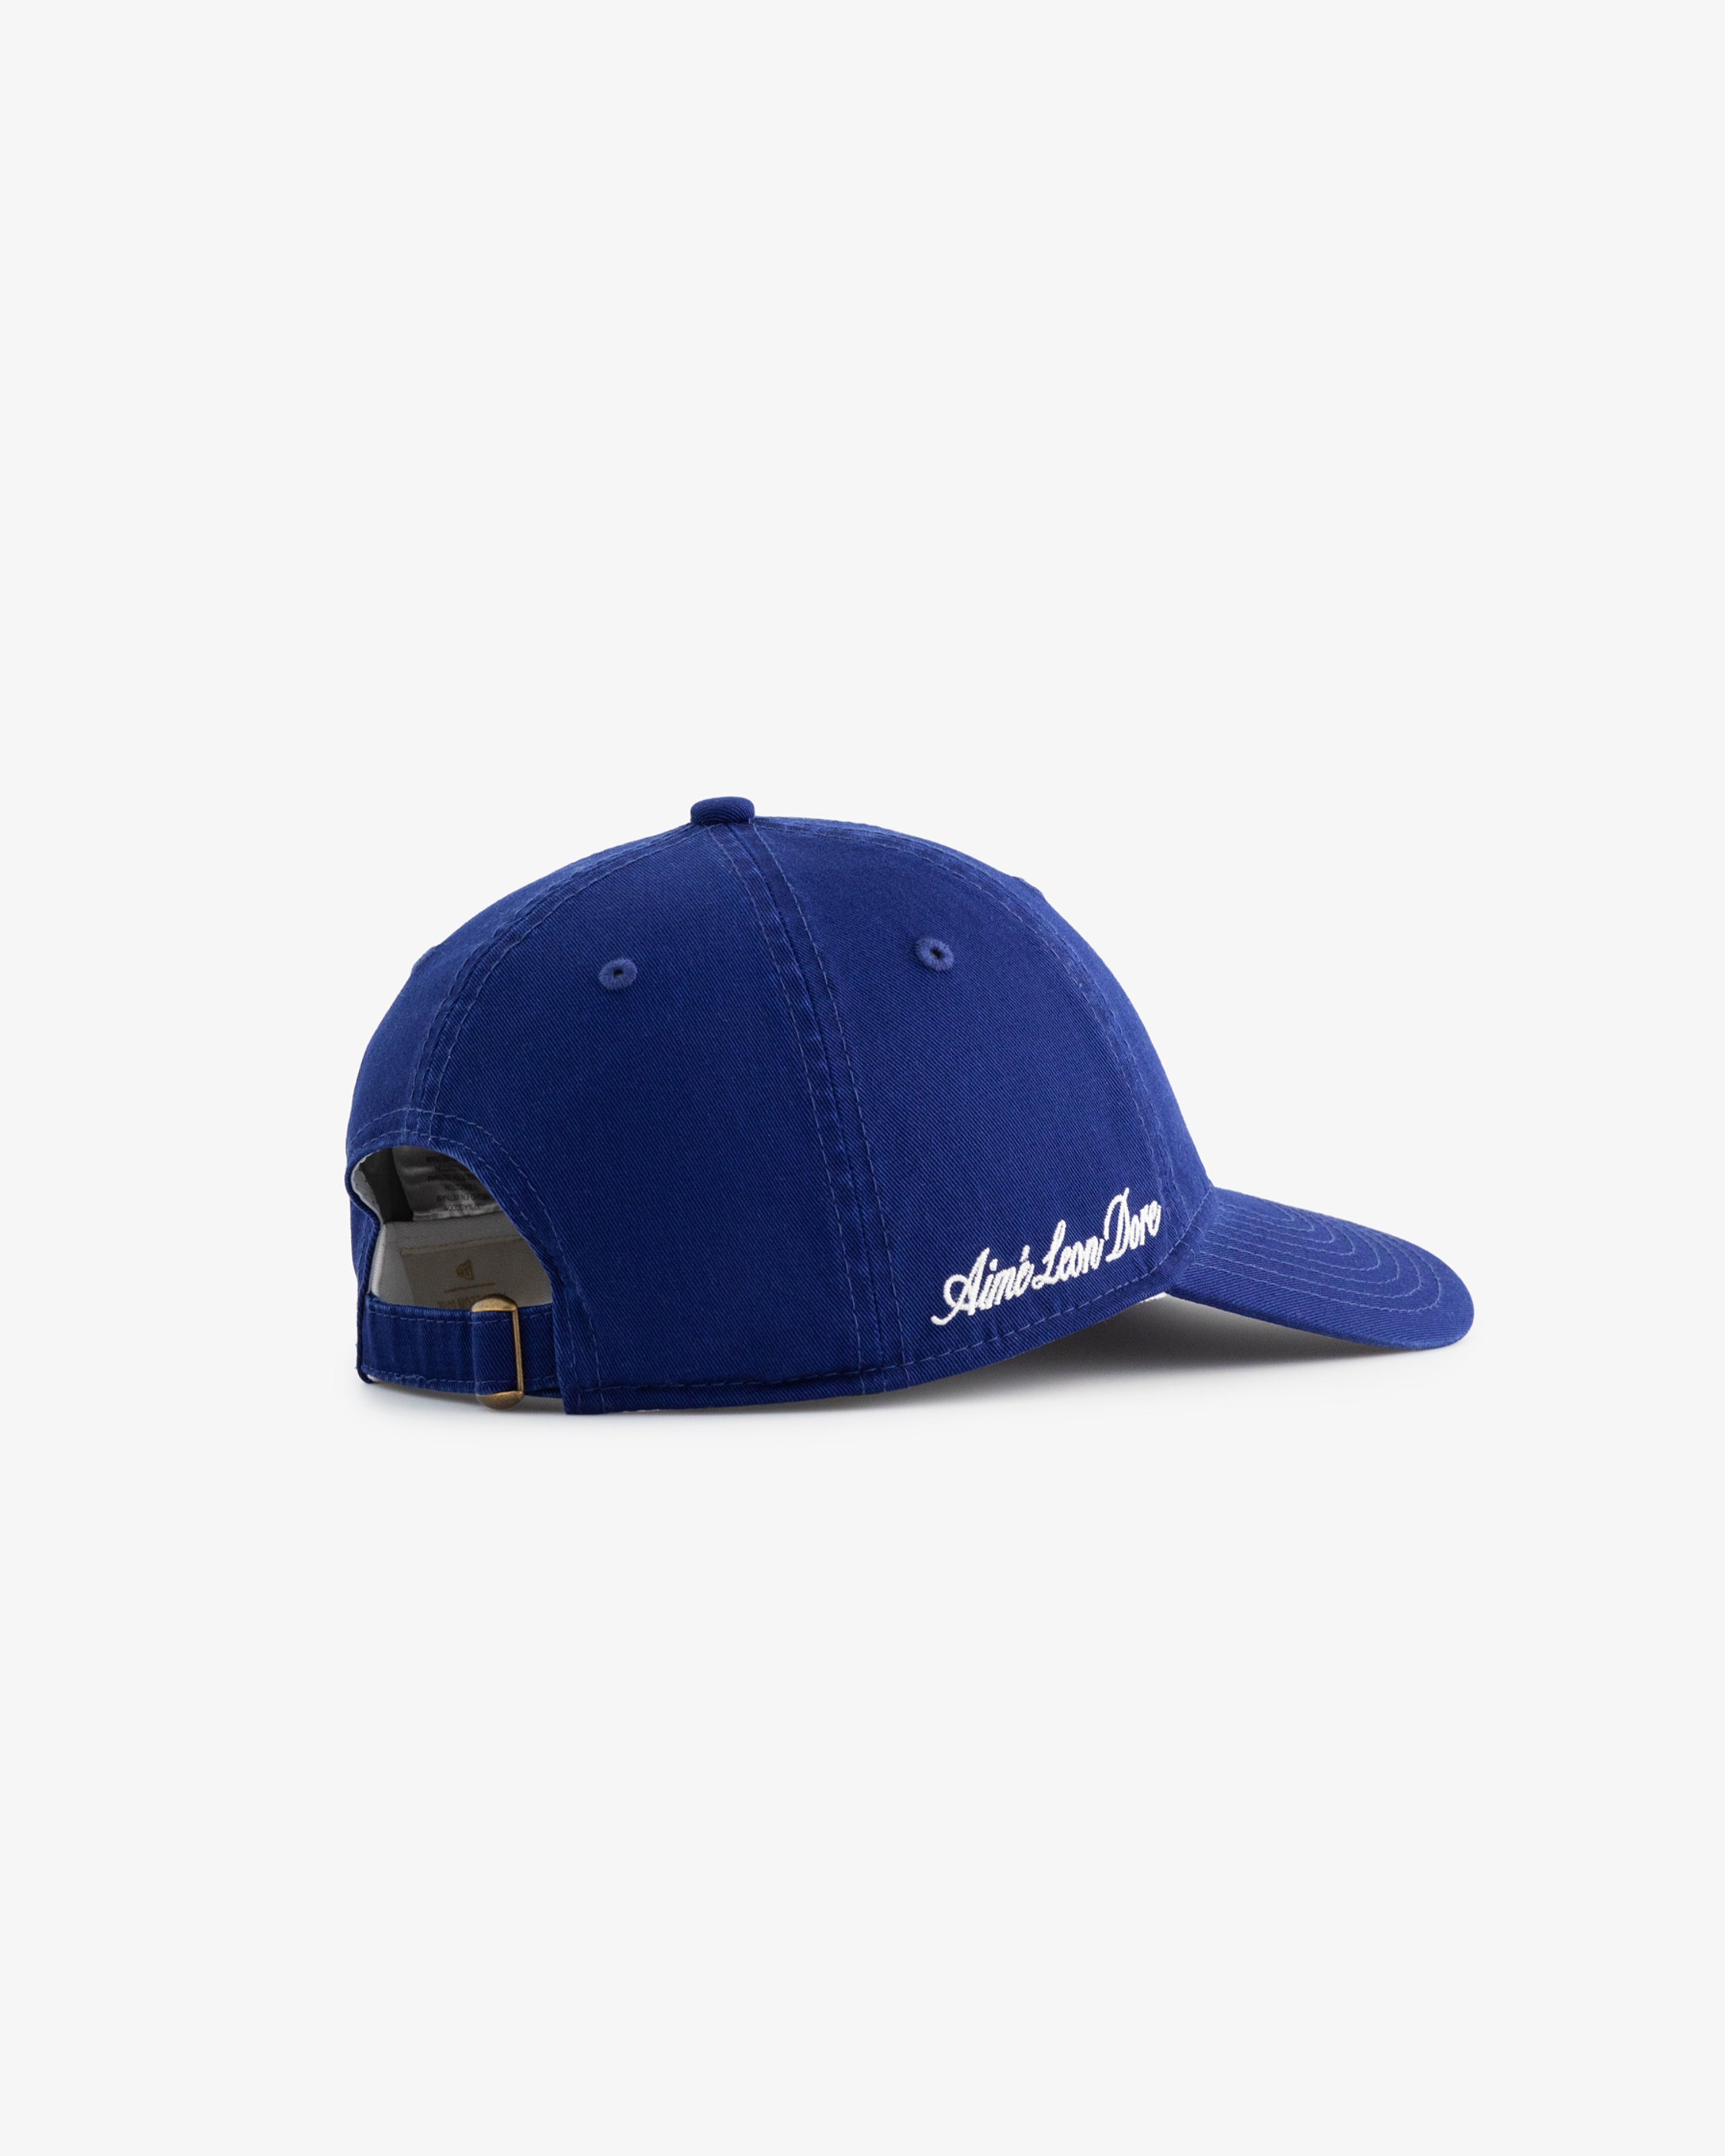 ALD / New Era Mets Big Logo Ballpark Hat